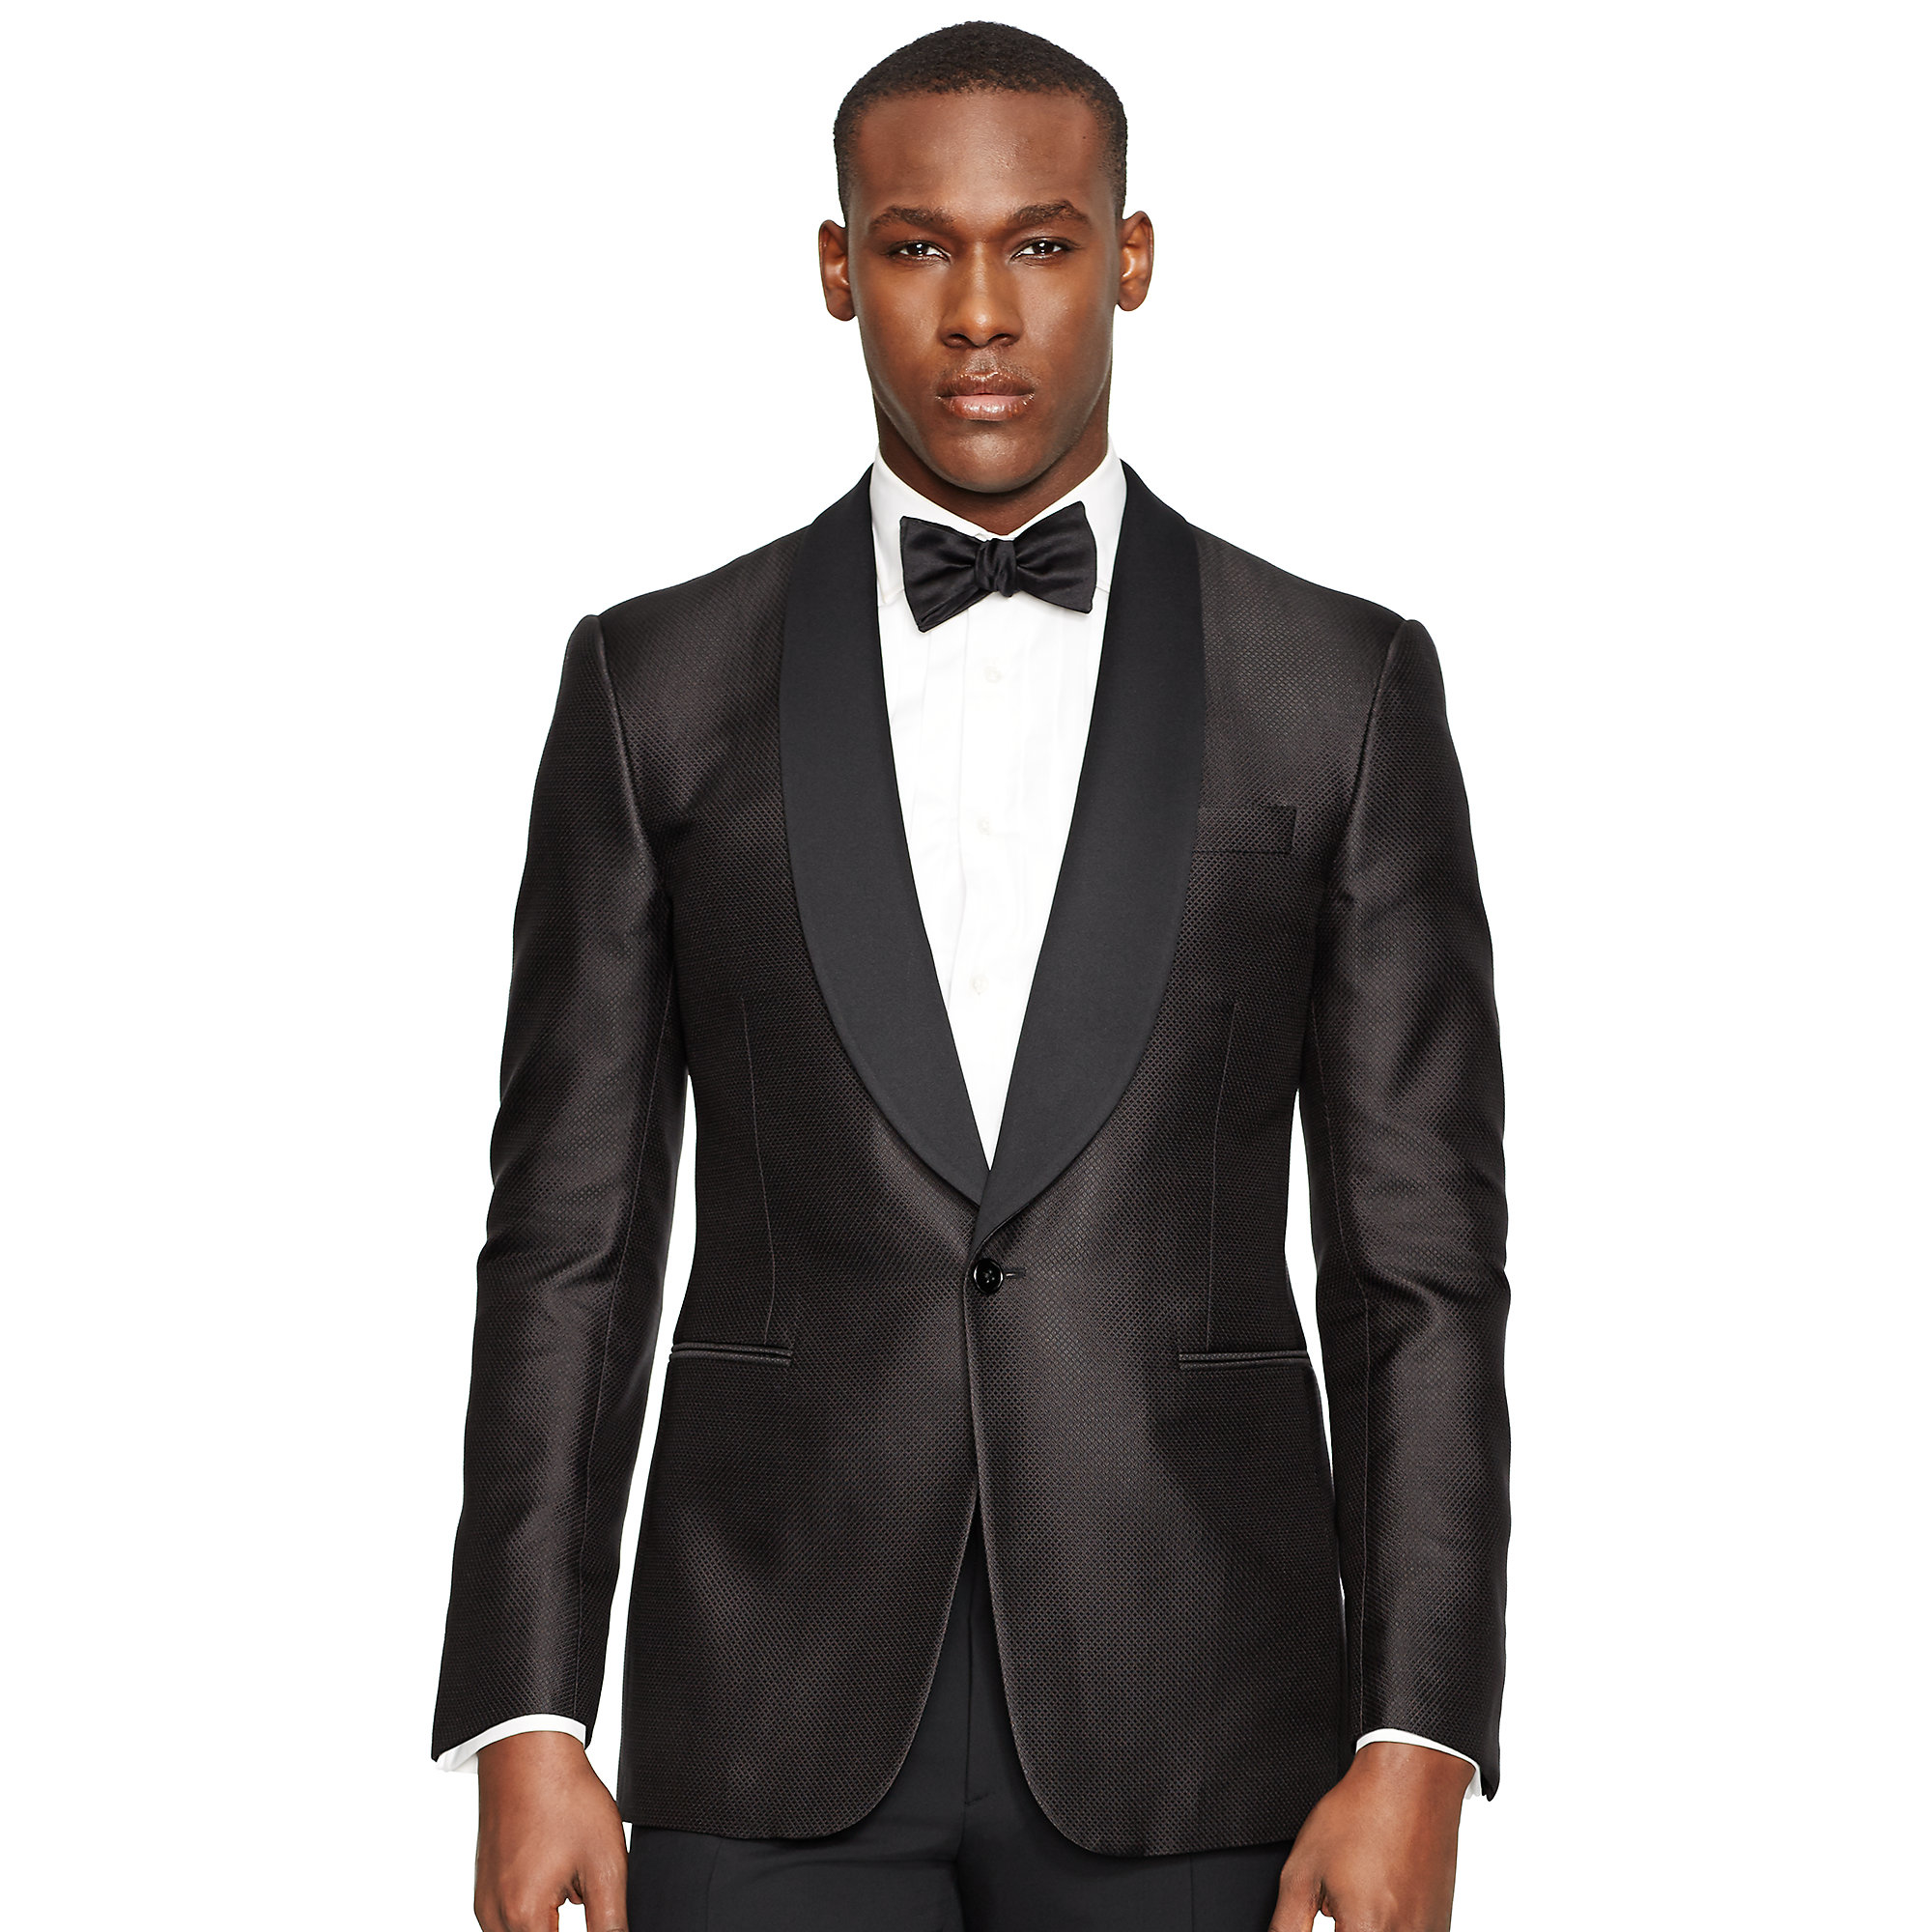 Ralph Lauren Black Label Anthony Silk Tuxedo Jacket in Black for Men - Lyst